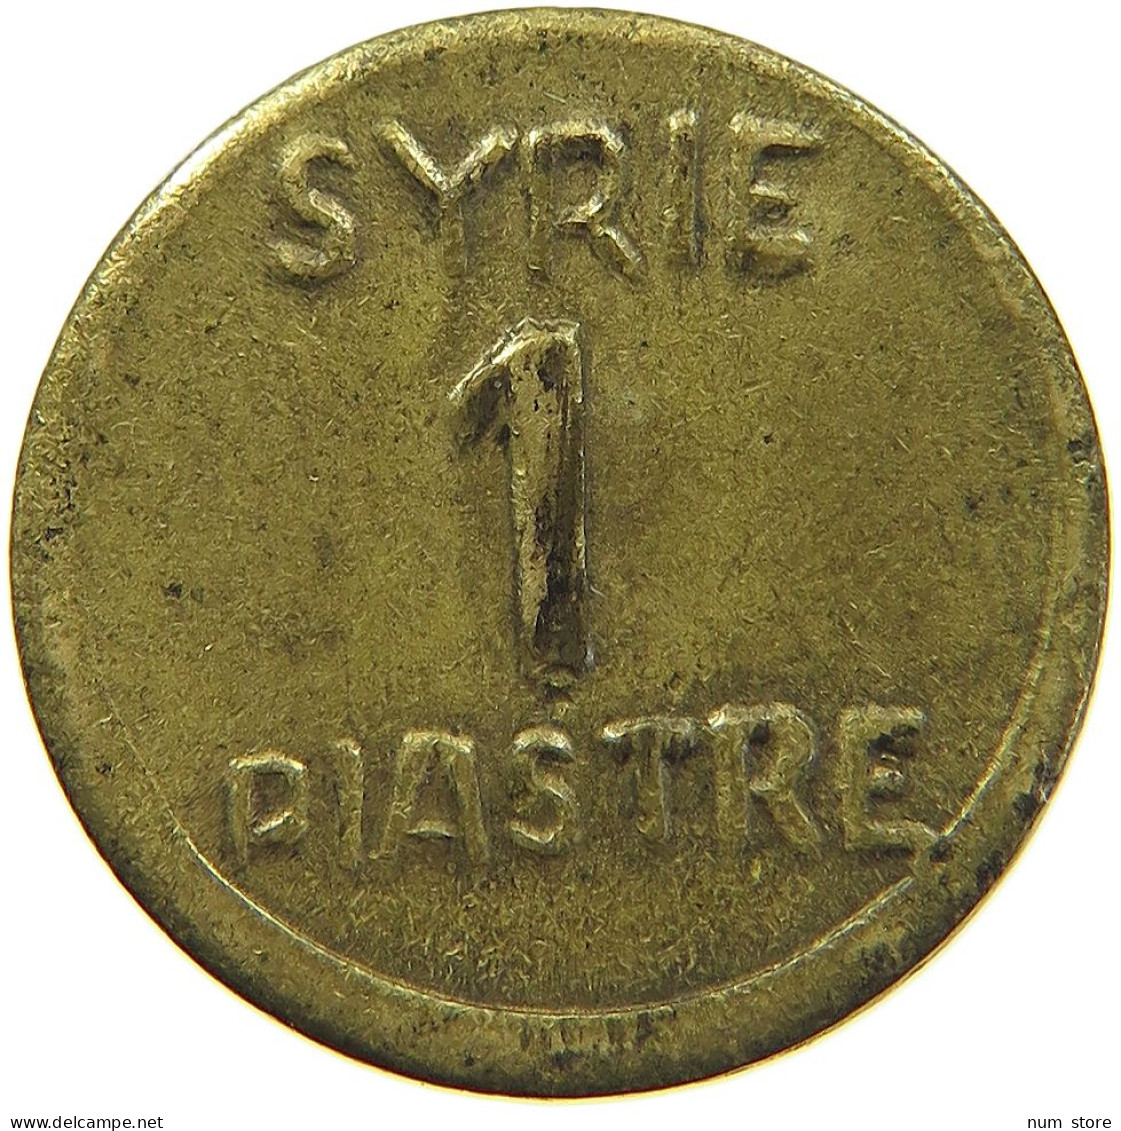 SYRIA PIASTRE   #MA 103885 - Syria